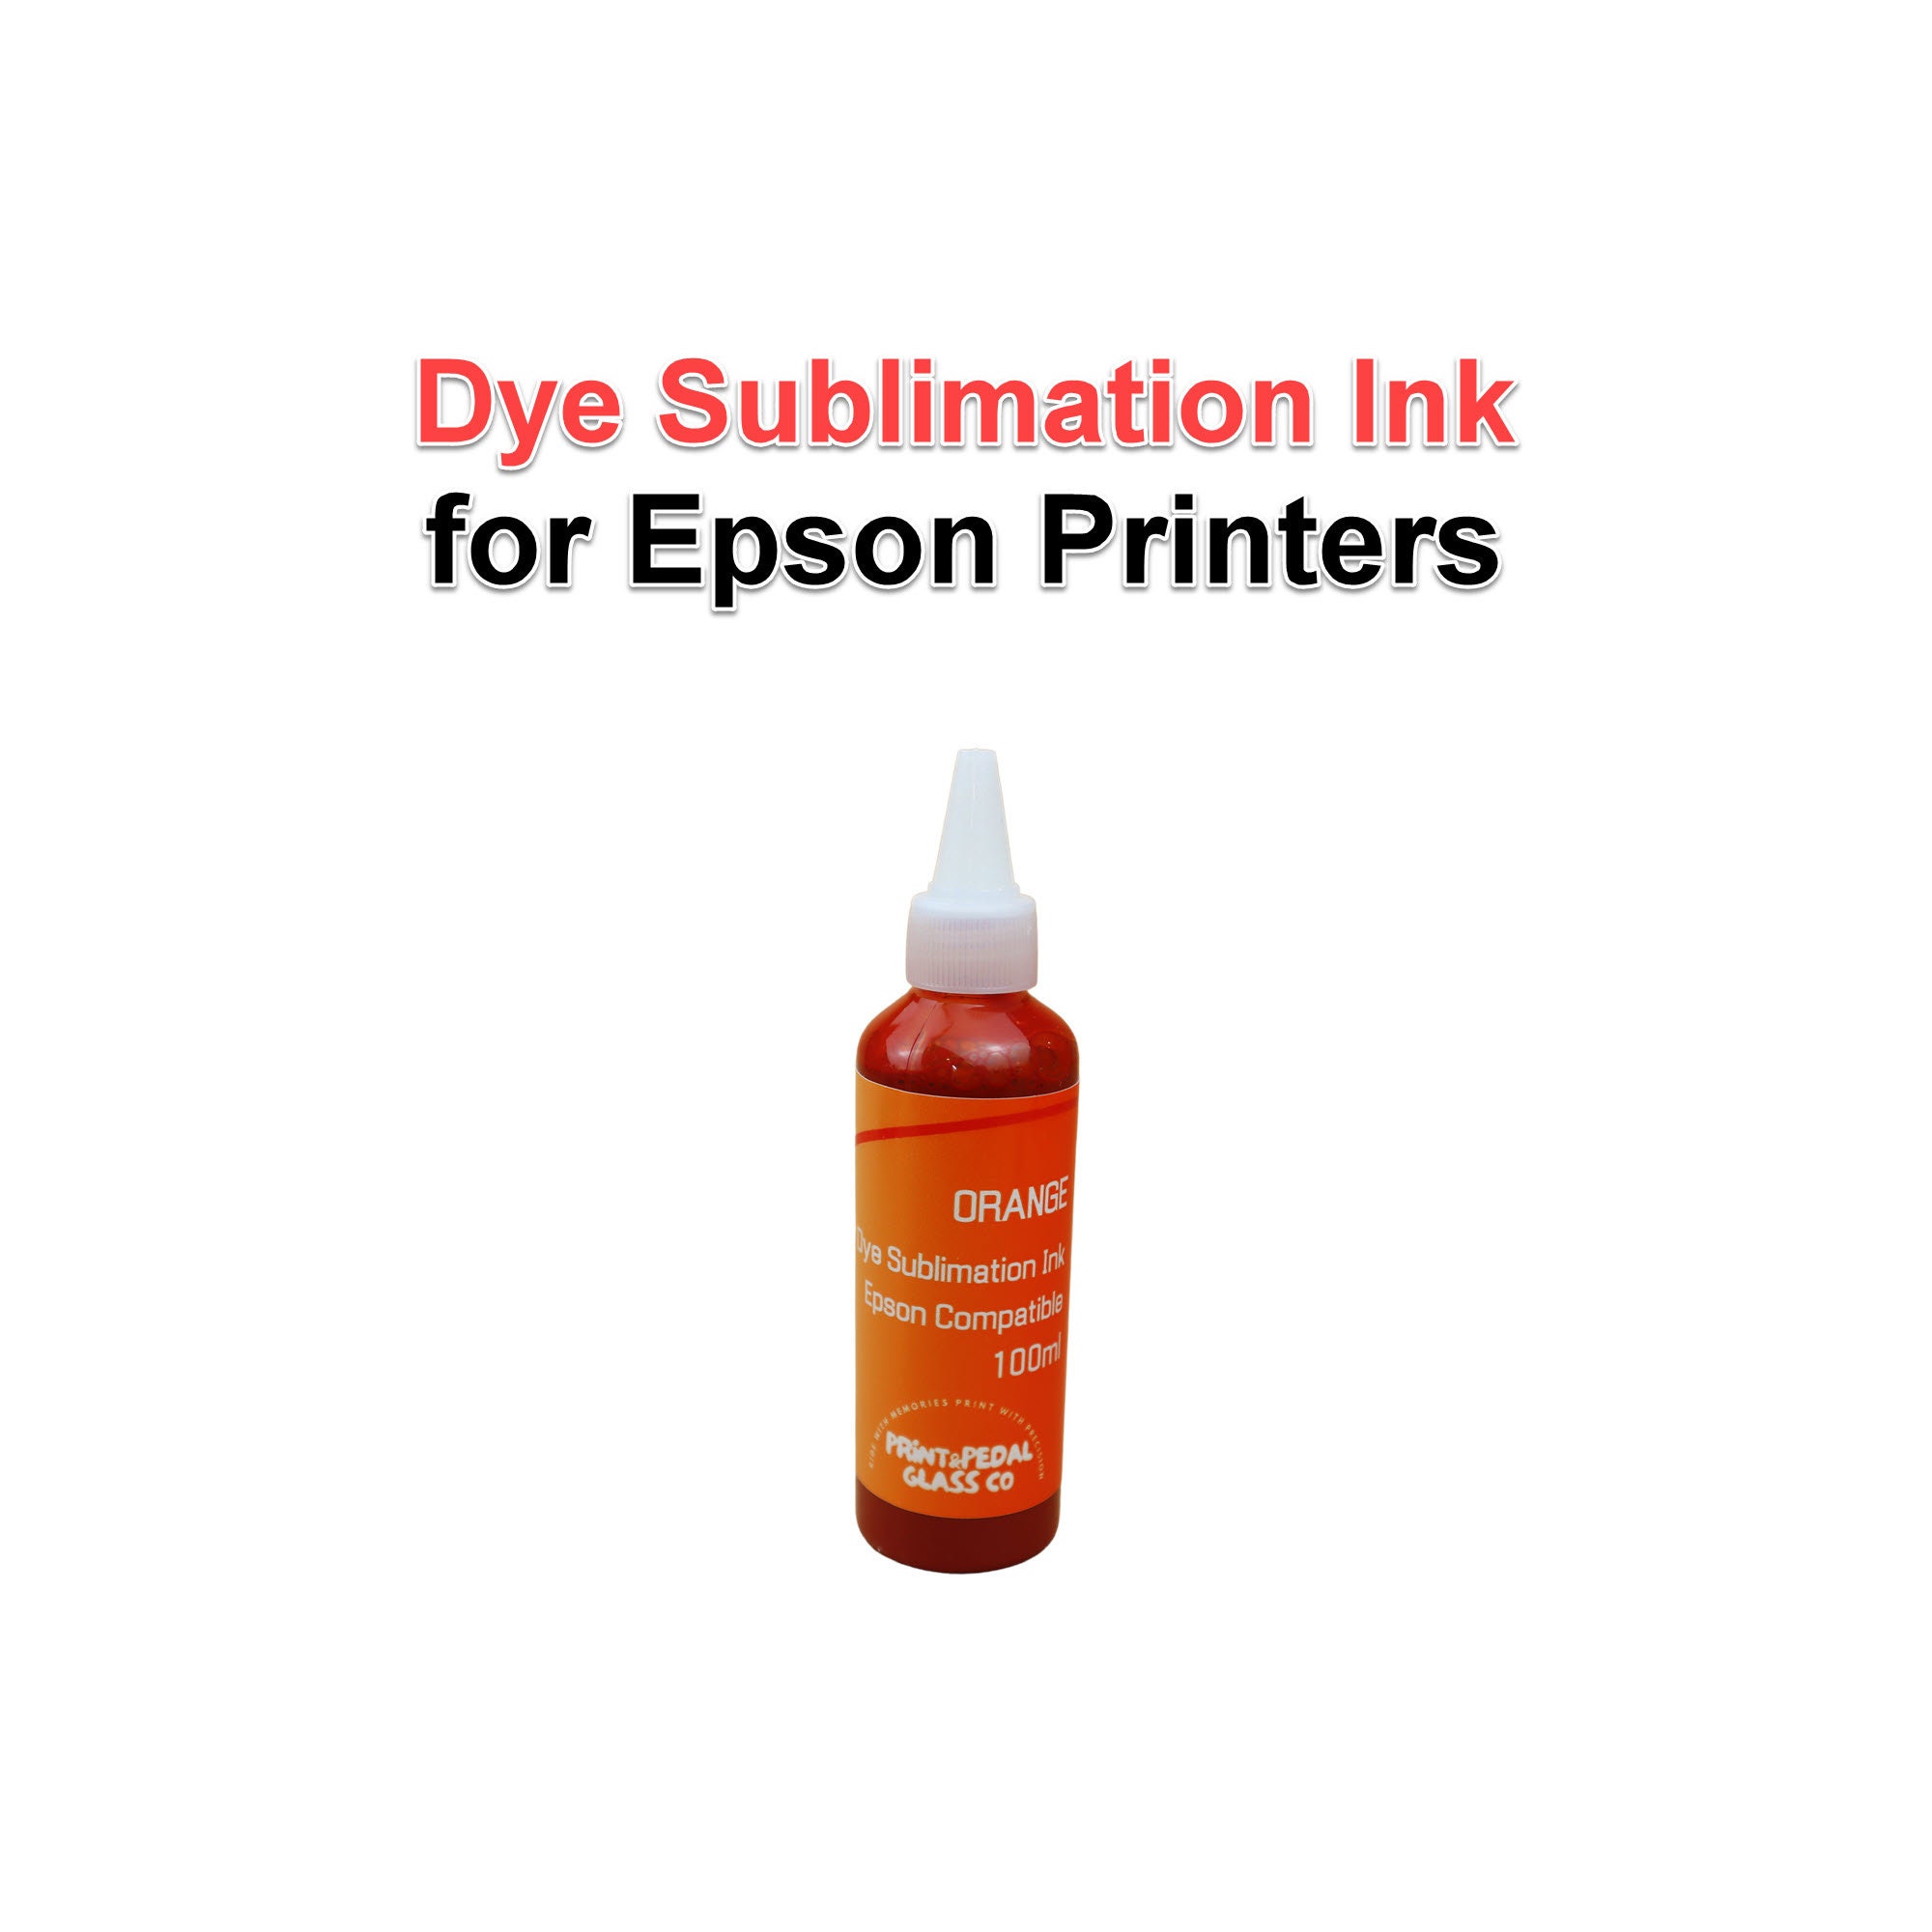 Sublimation Printer Bundle Epson WorkForce WF-2850 with Refillable  Sublimation Cartridges, Sublimation Ink & Transfer Paper